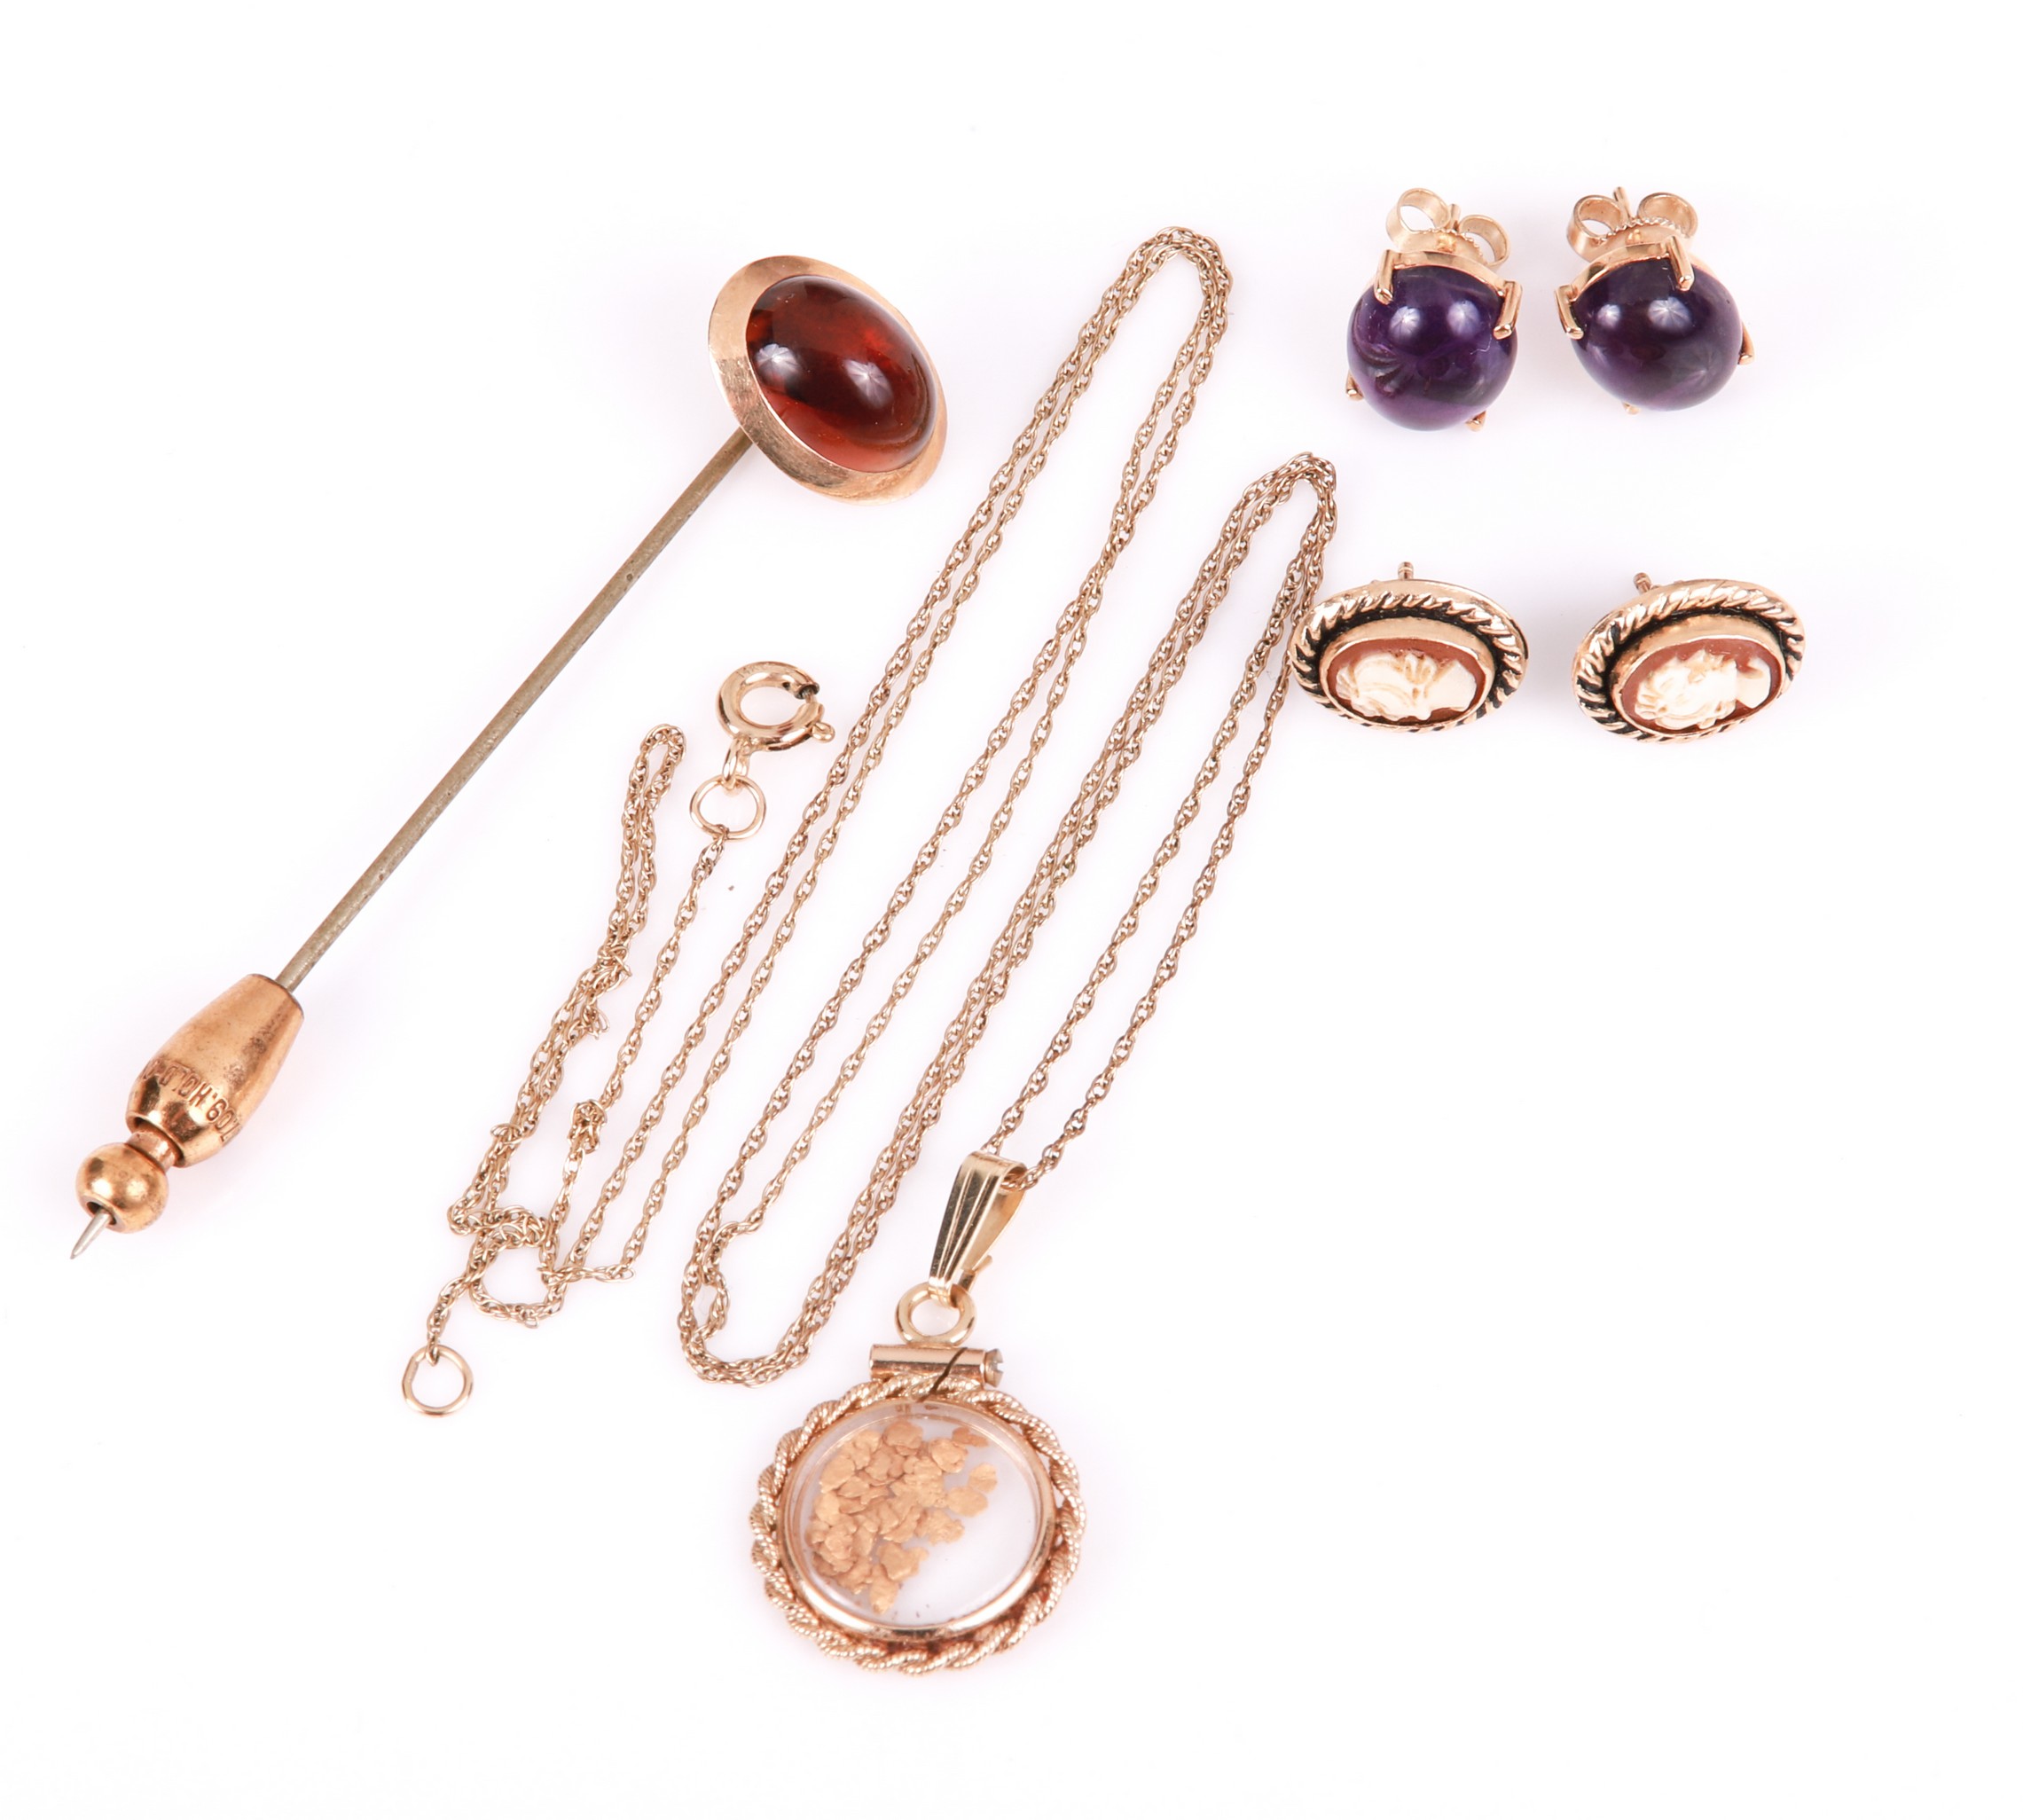  4 Gold earrings pin and pendant 3b5b60